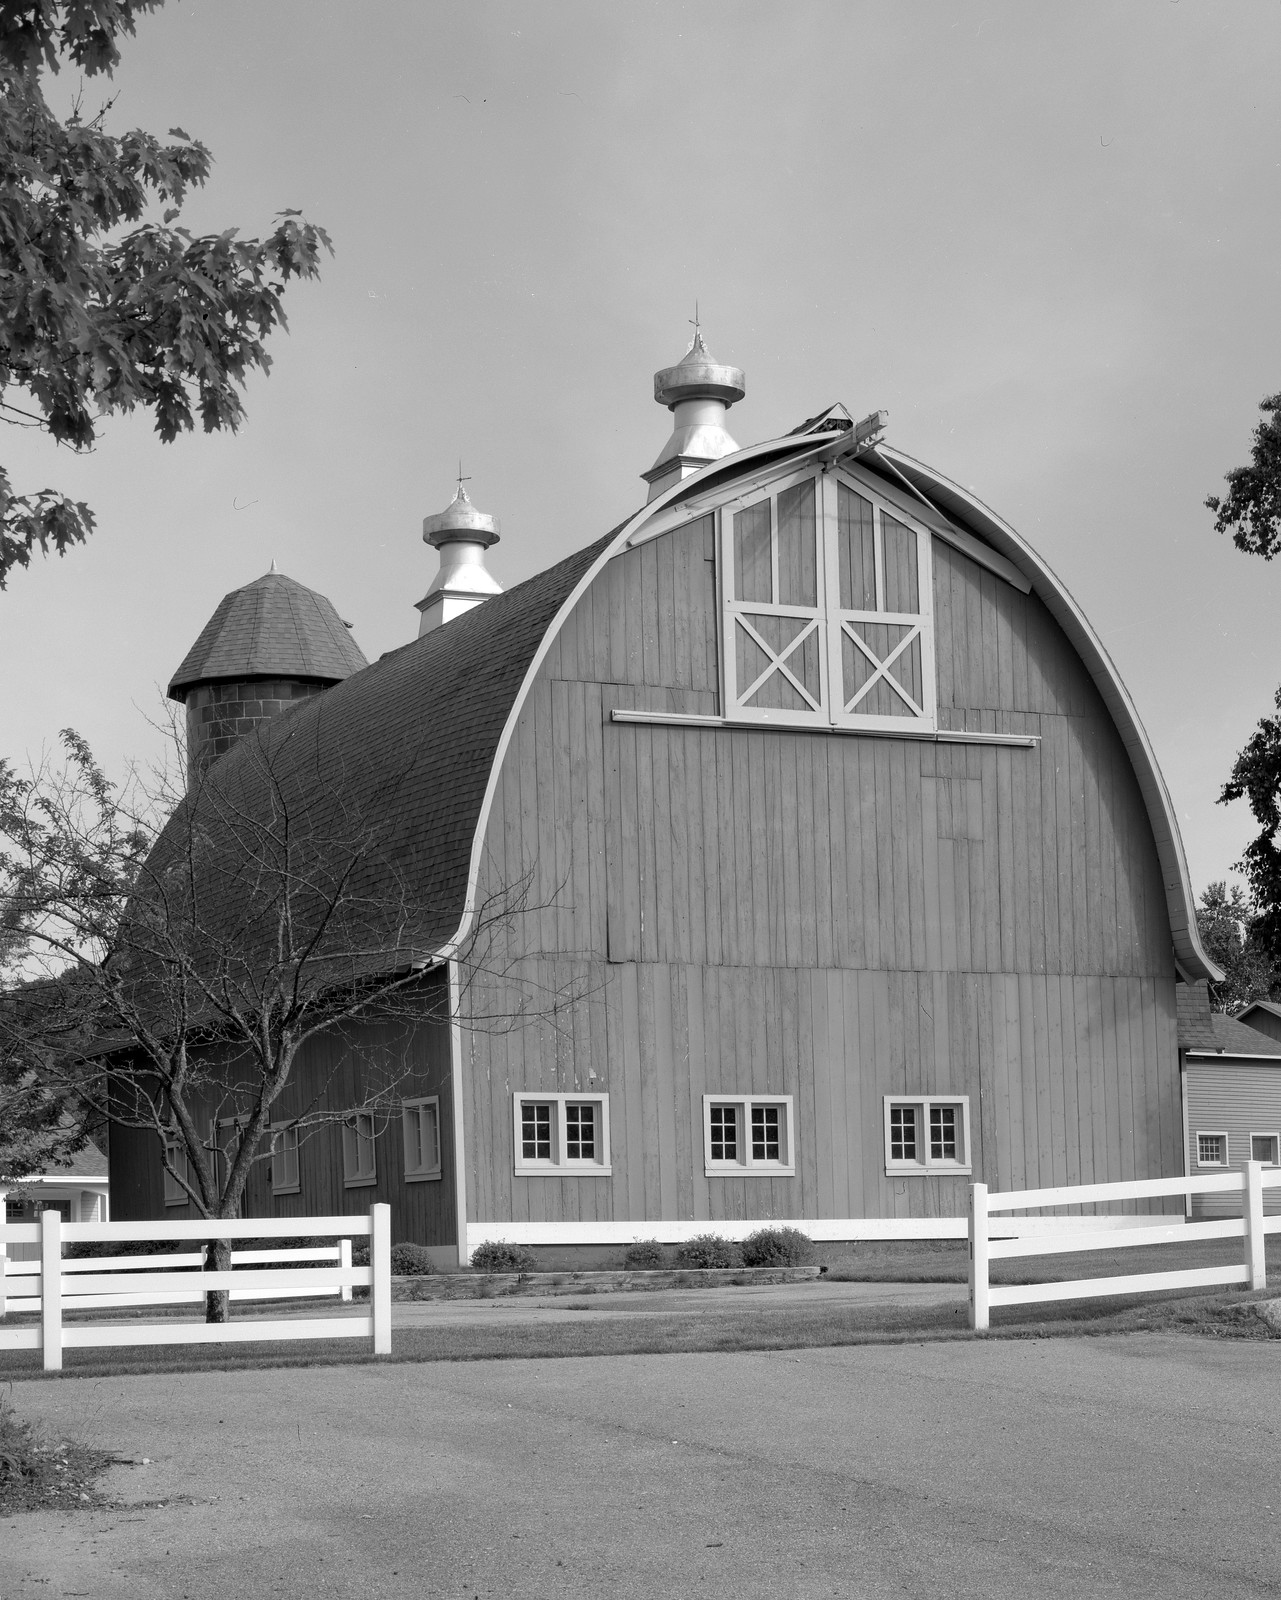 The Birchwood Barn